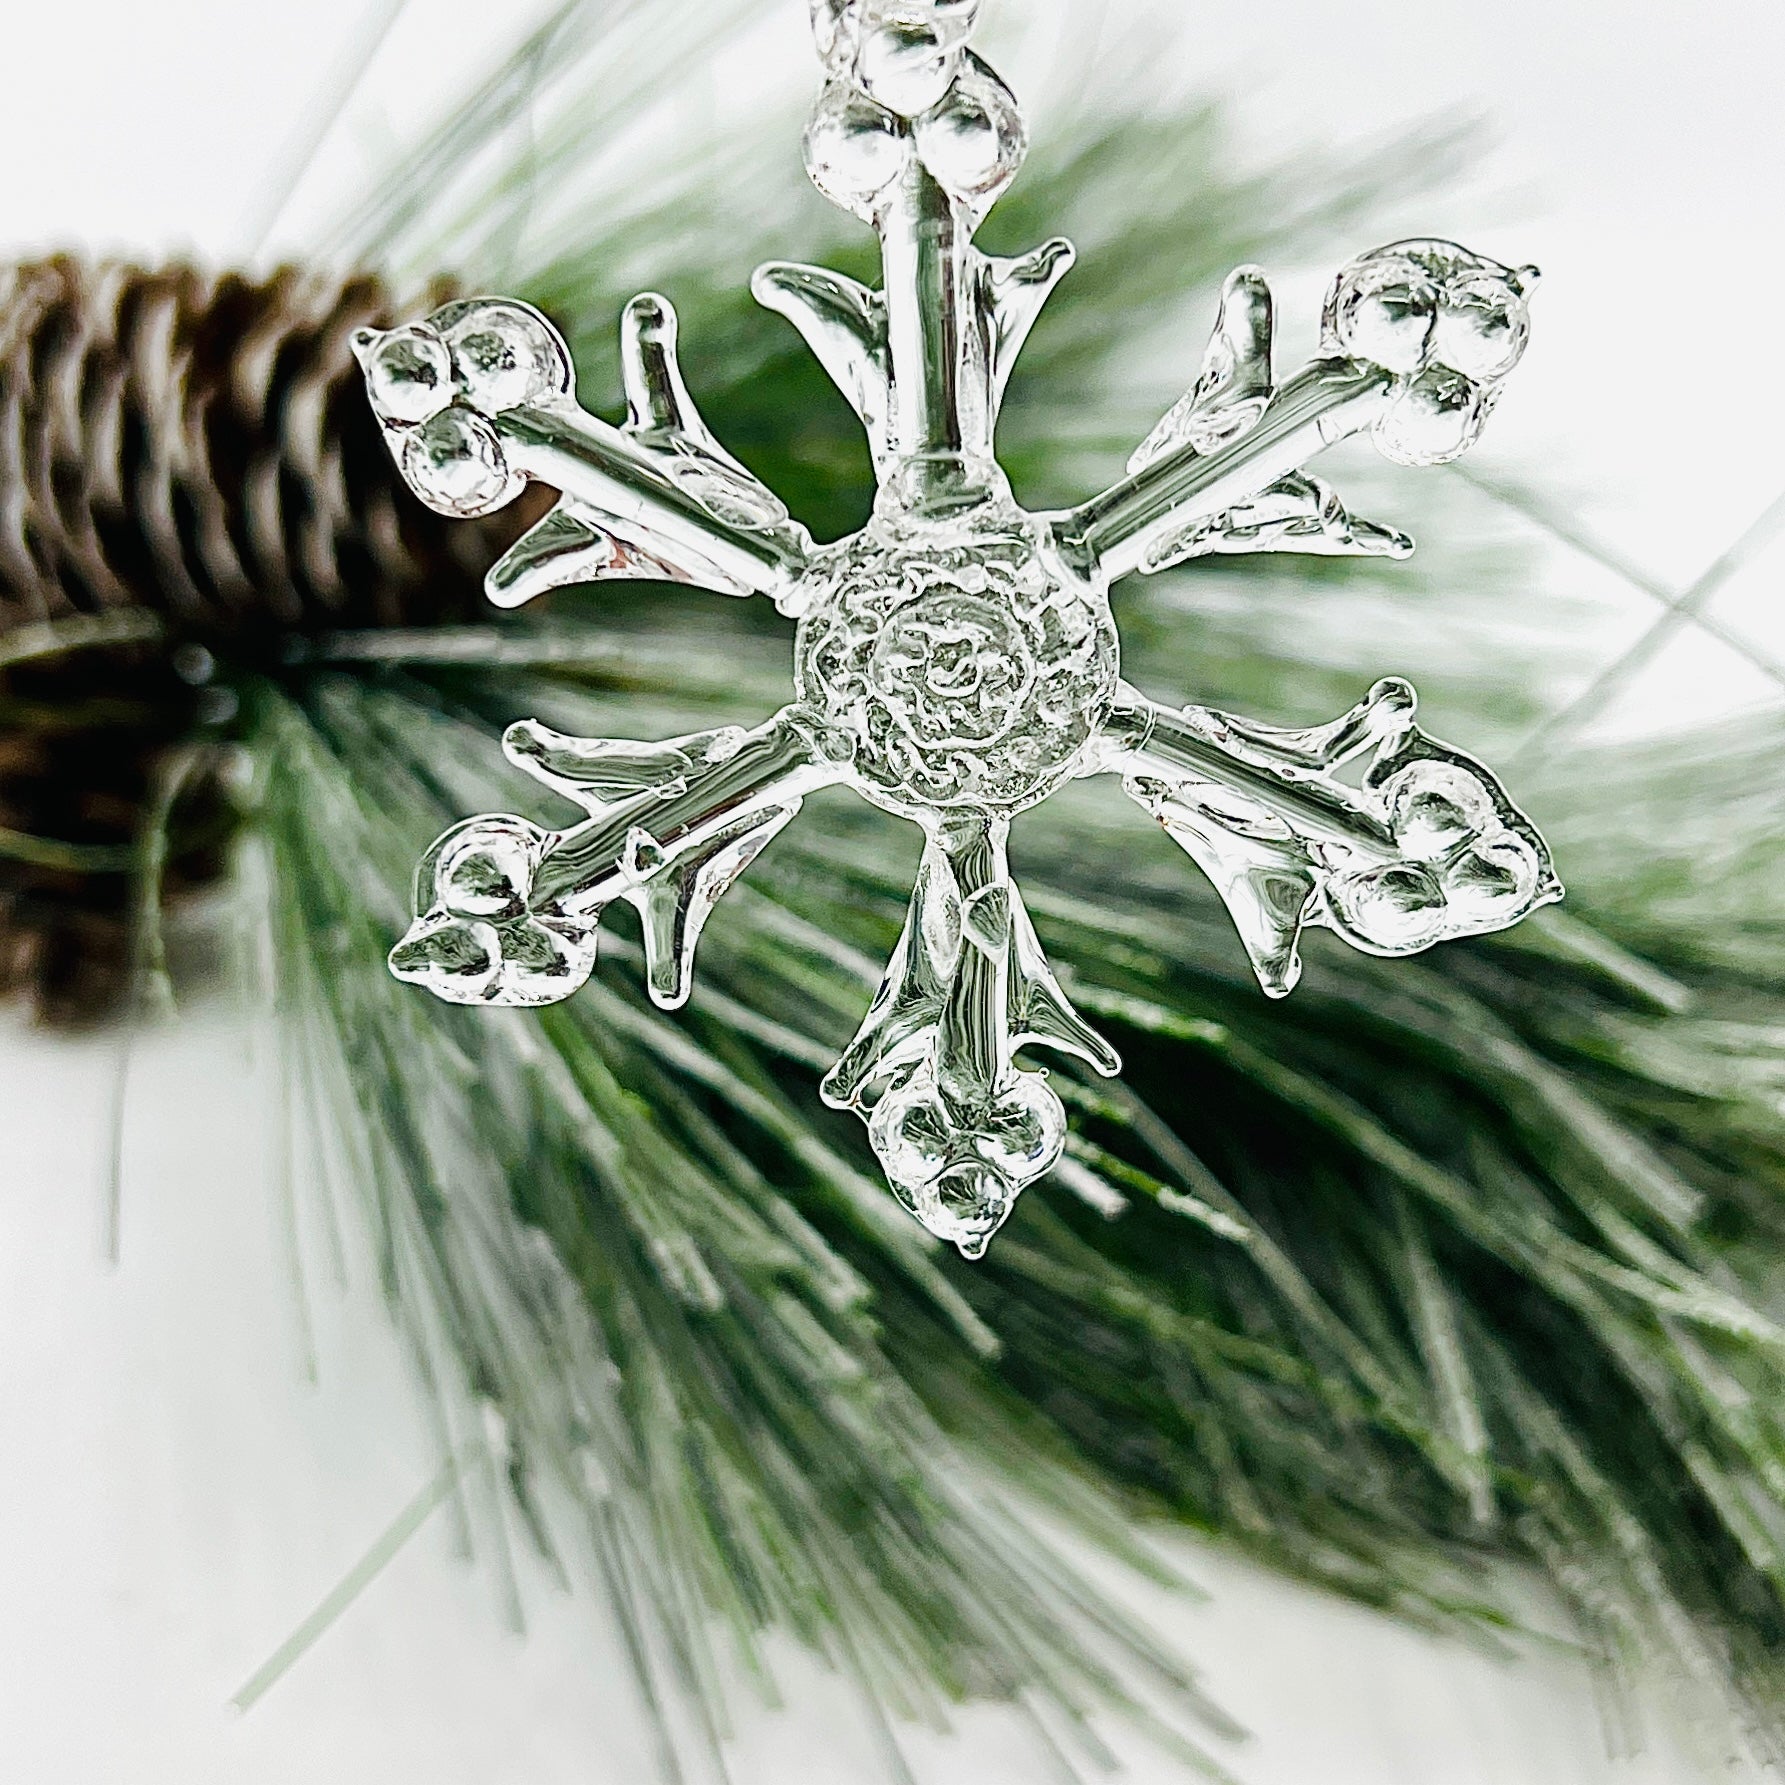 Mini Clear Snowflake, Thistle Ornament - 